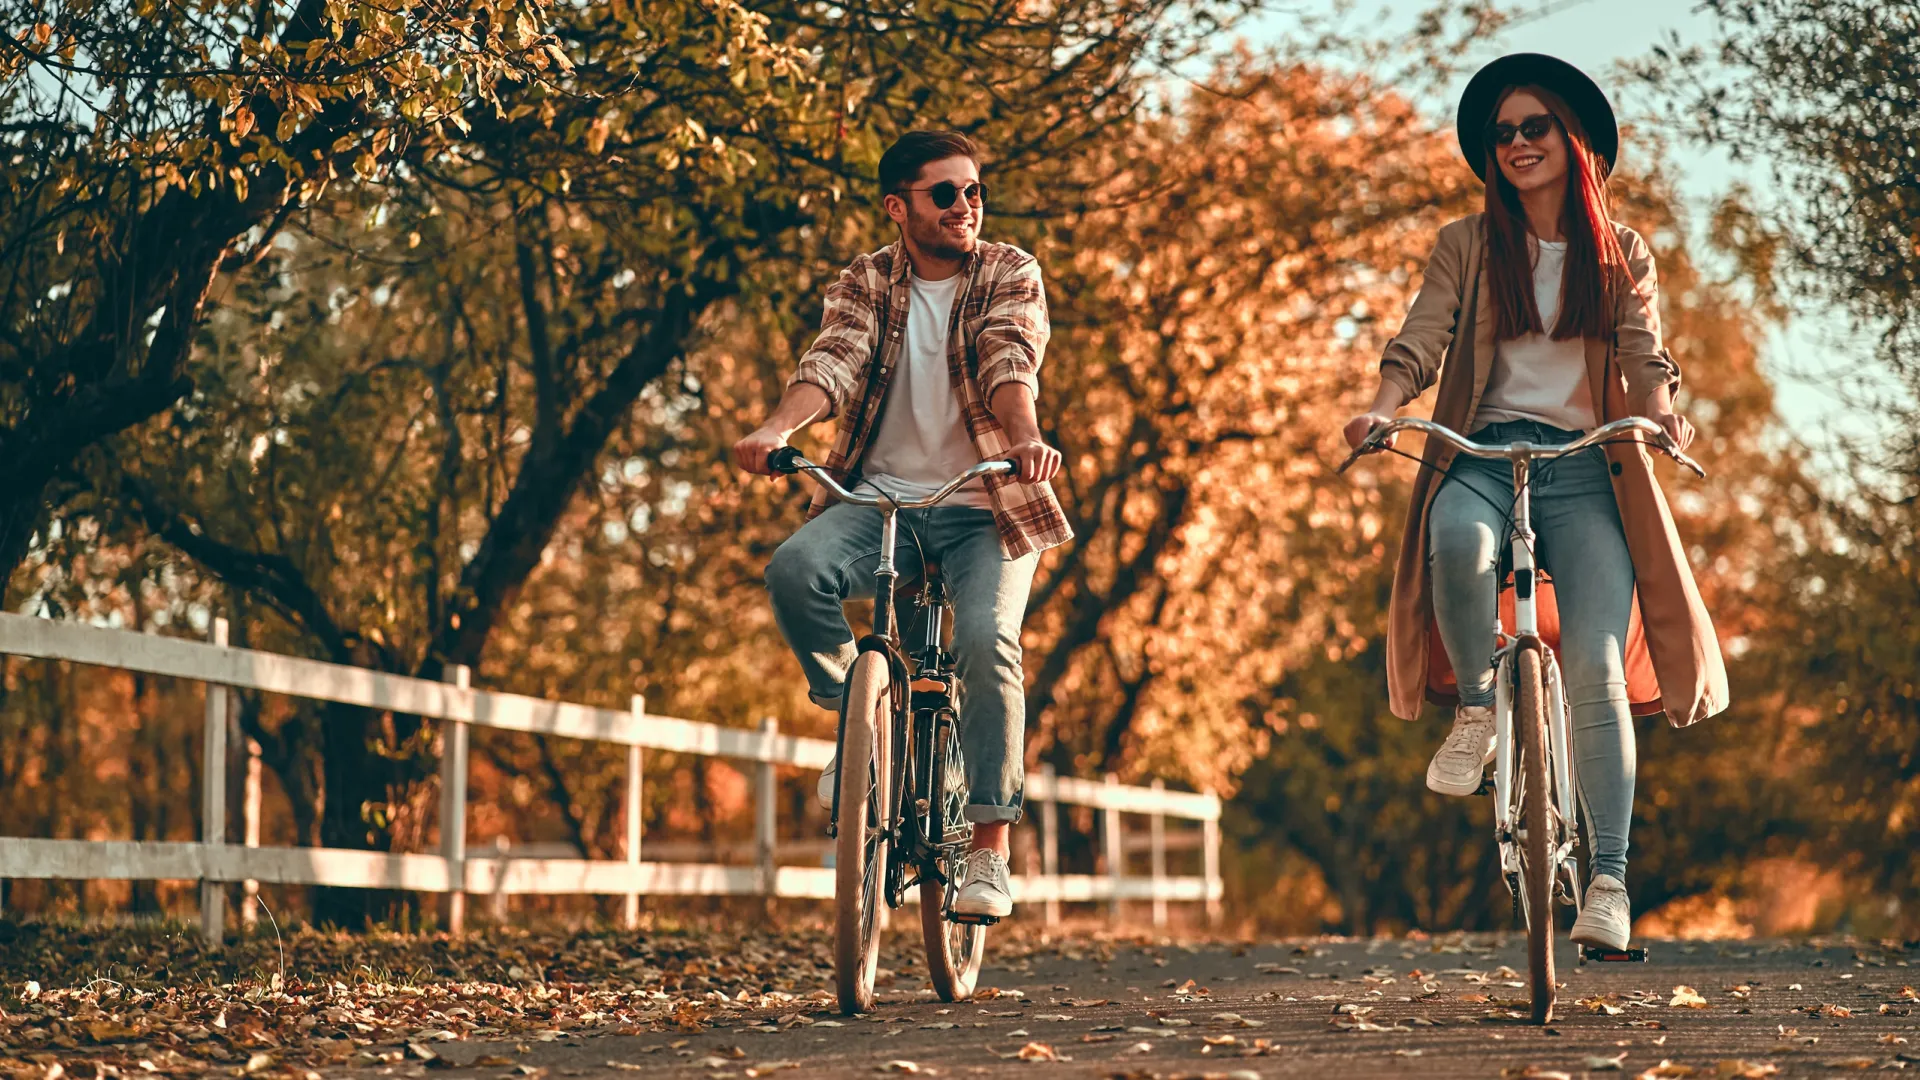 Осеннюю прогулку скрасит приятная компания. Фото: 4 PM production/Shutterstock/Fotodom